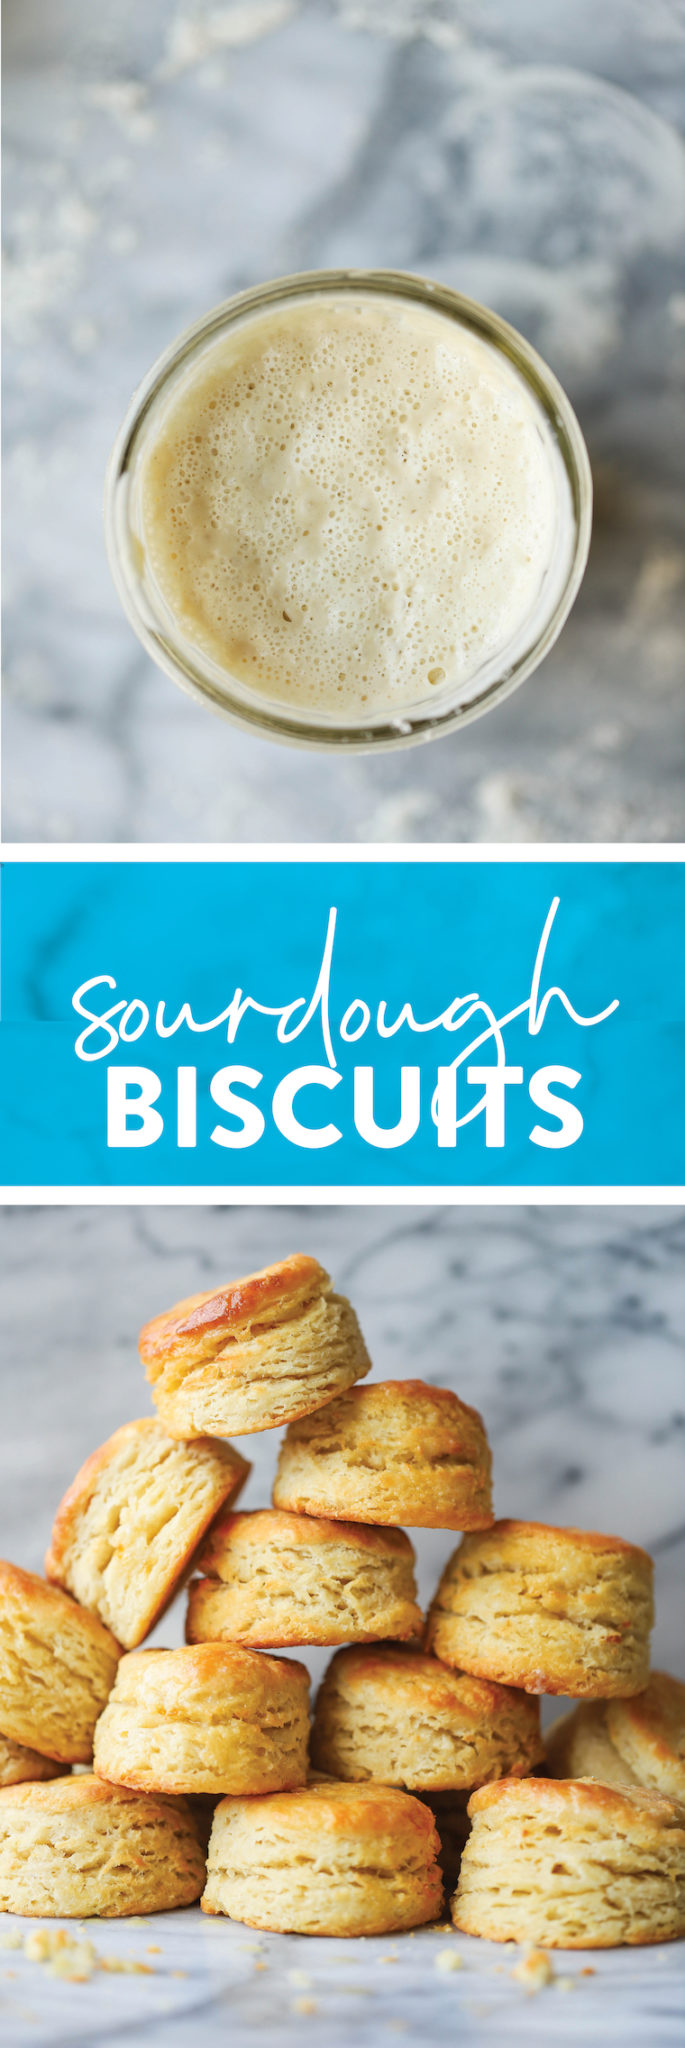 Sourdough Biscuits - Damn Delicious